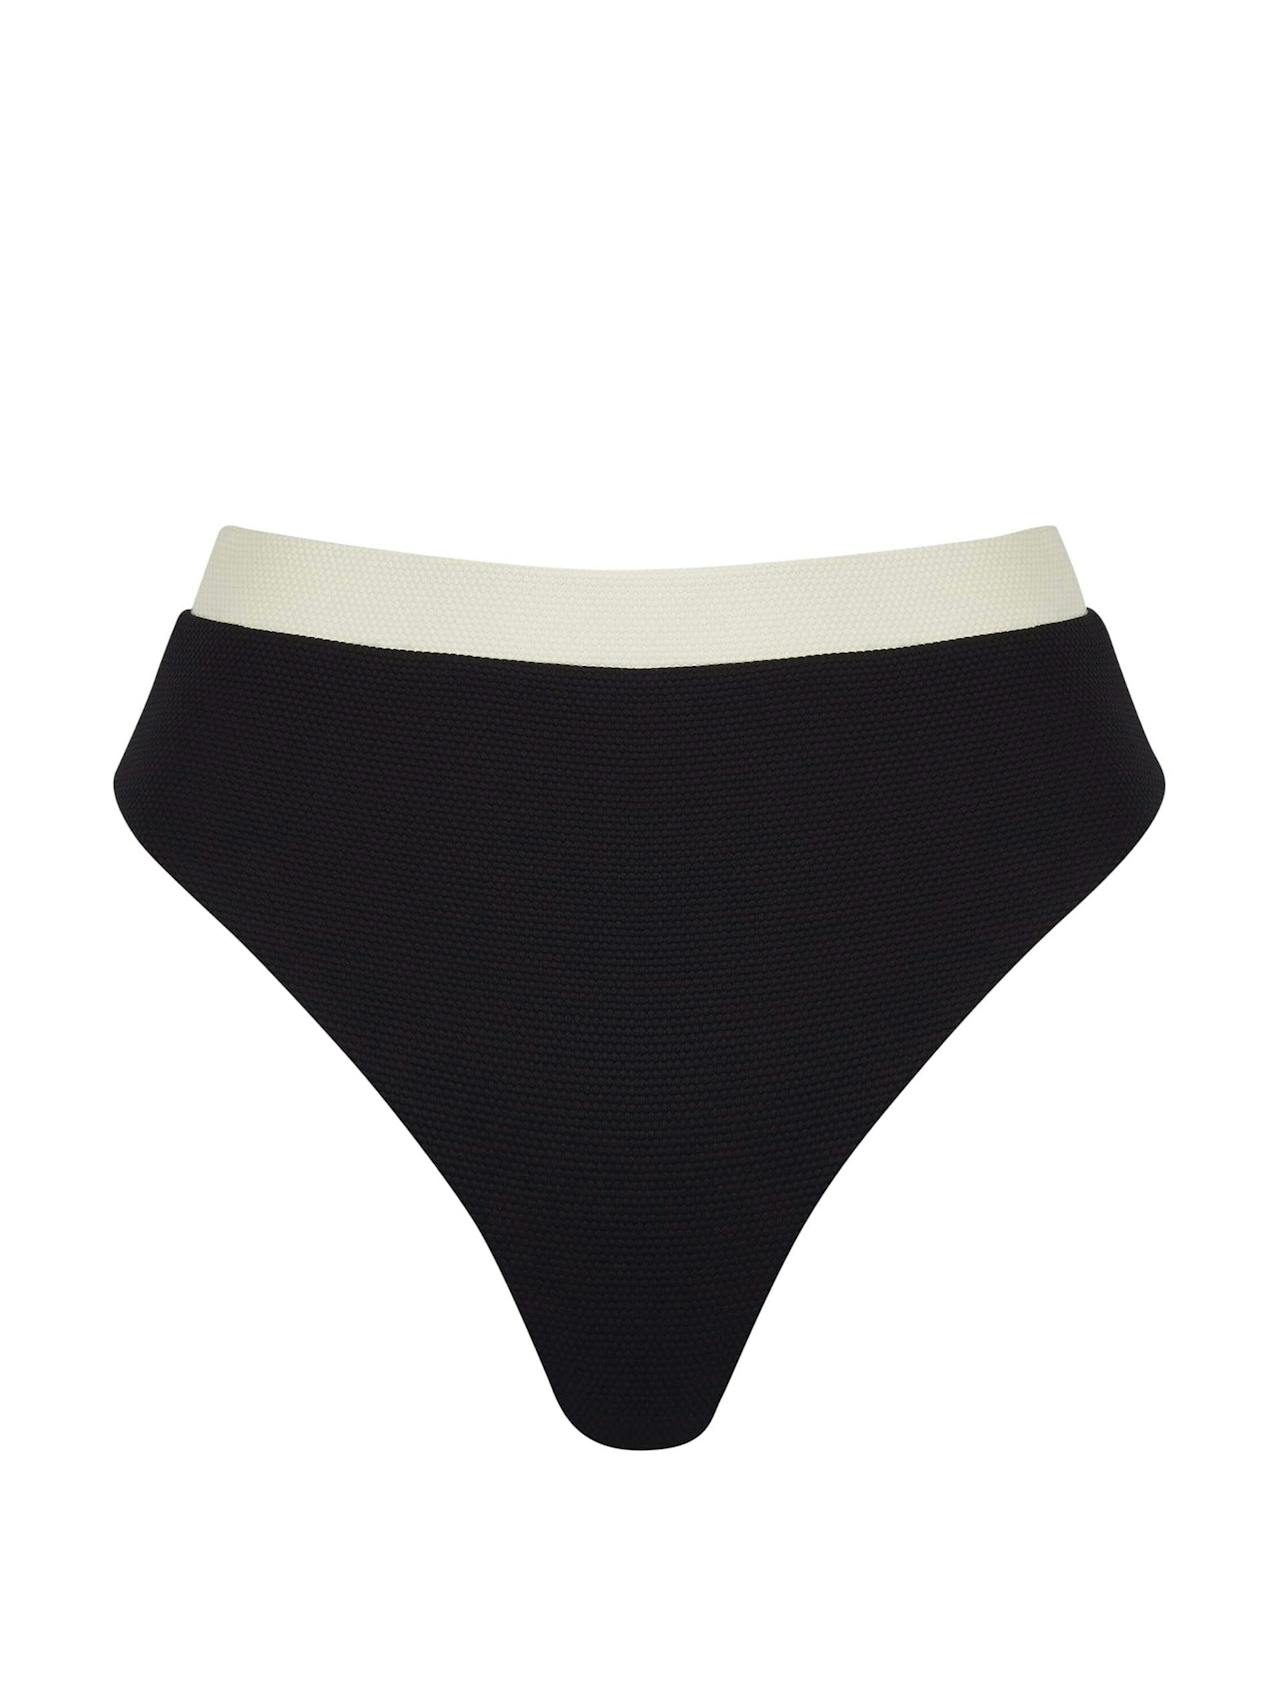 The Claude bikini bottom in black and ecru